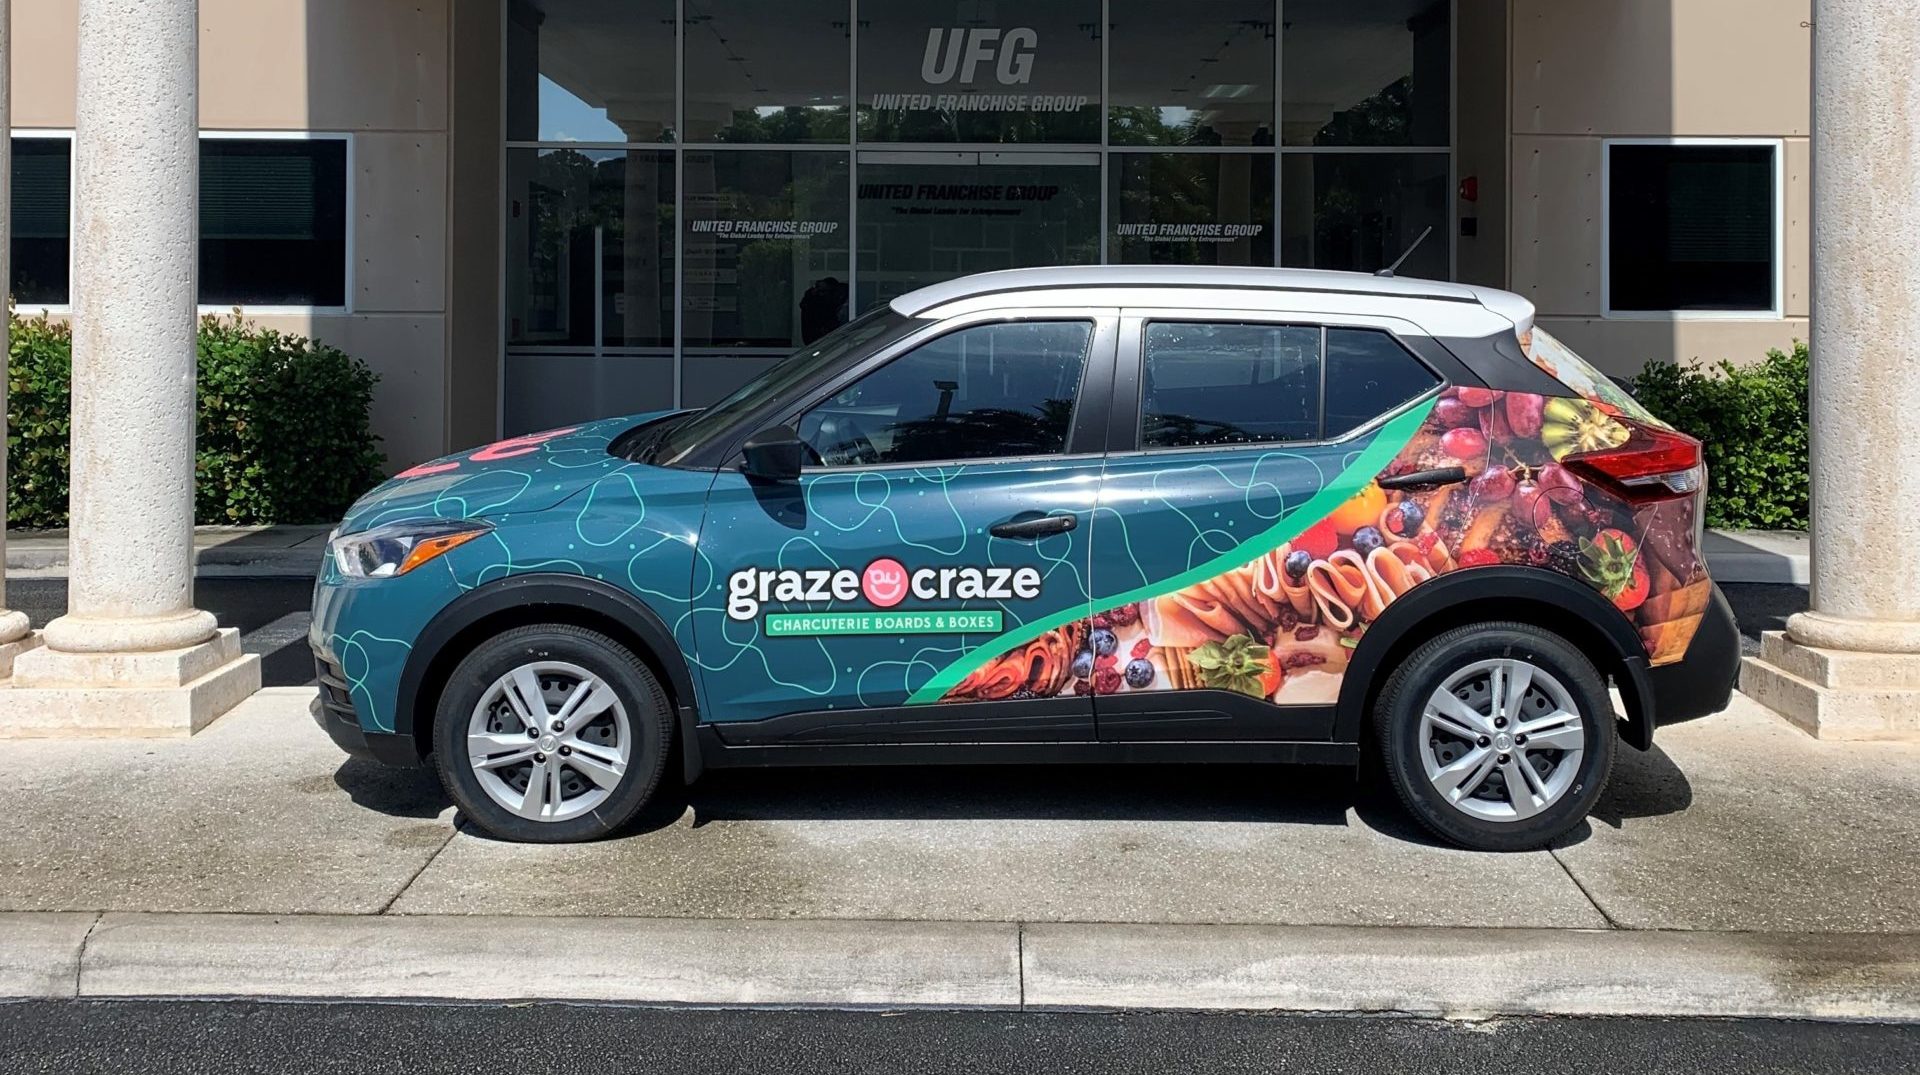 image of wrapped graze craze vehicle.